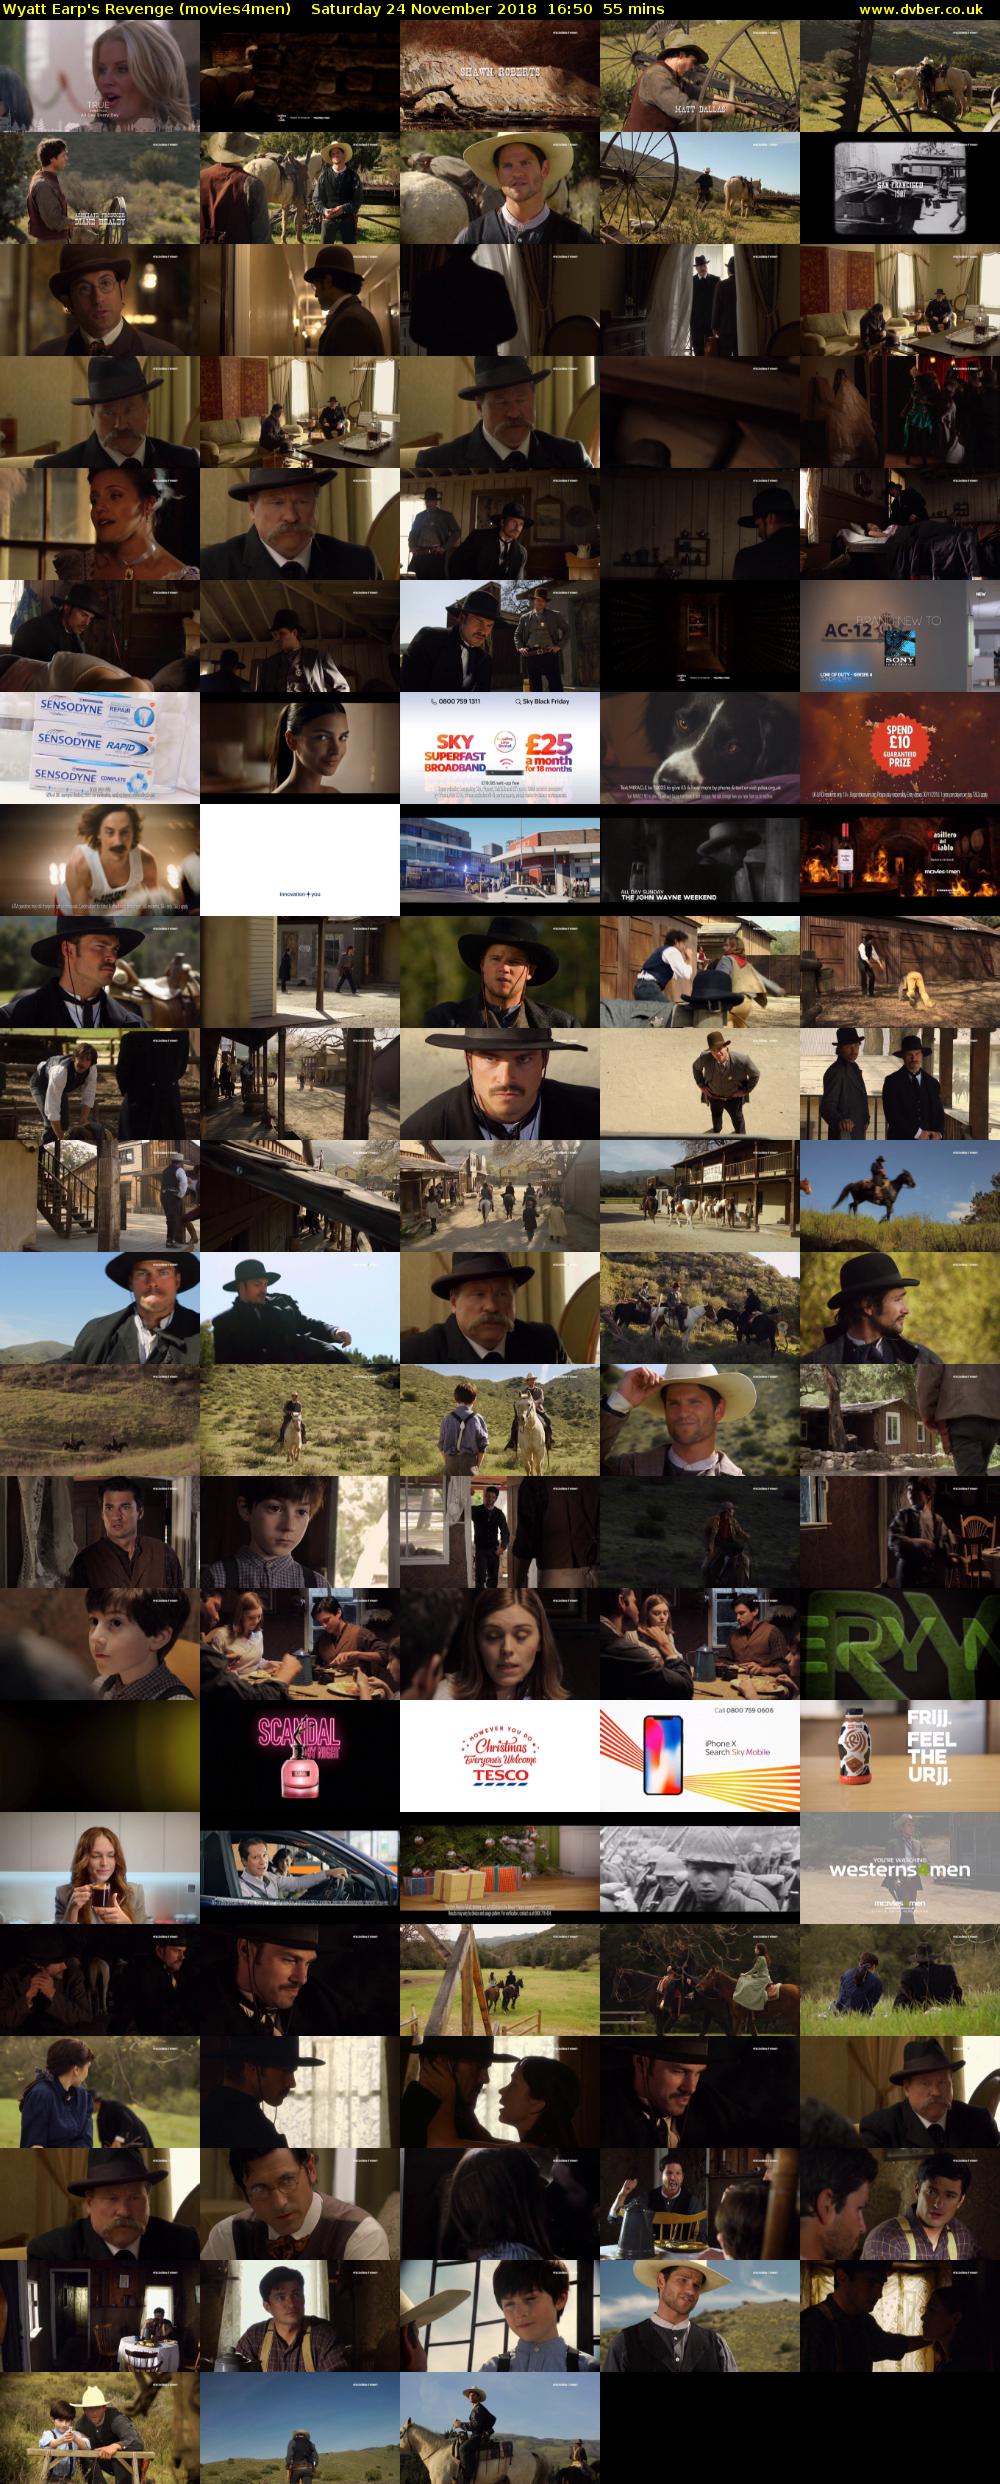 Wyatt Earp's Revenge (movies4men) Saturday 24 November 2018 16:50 - 17:45